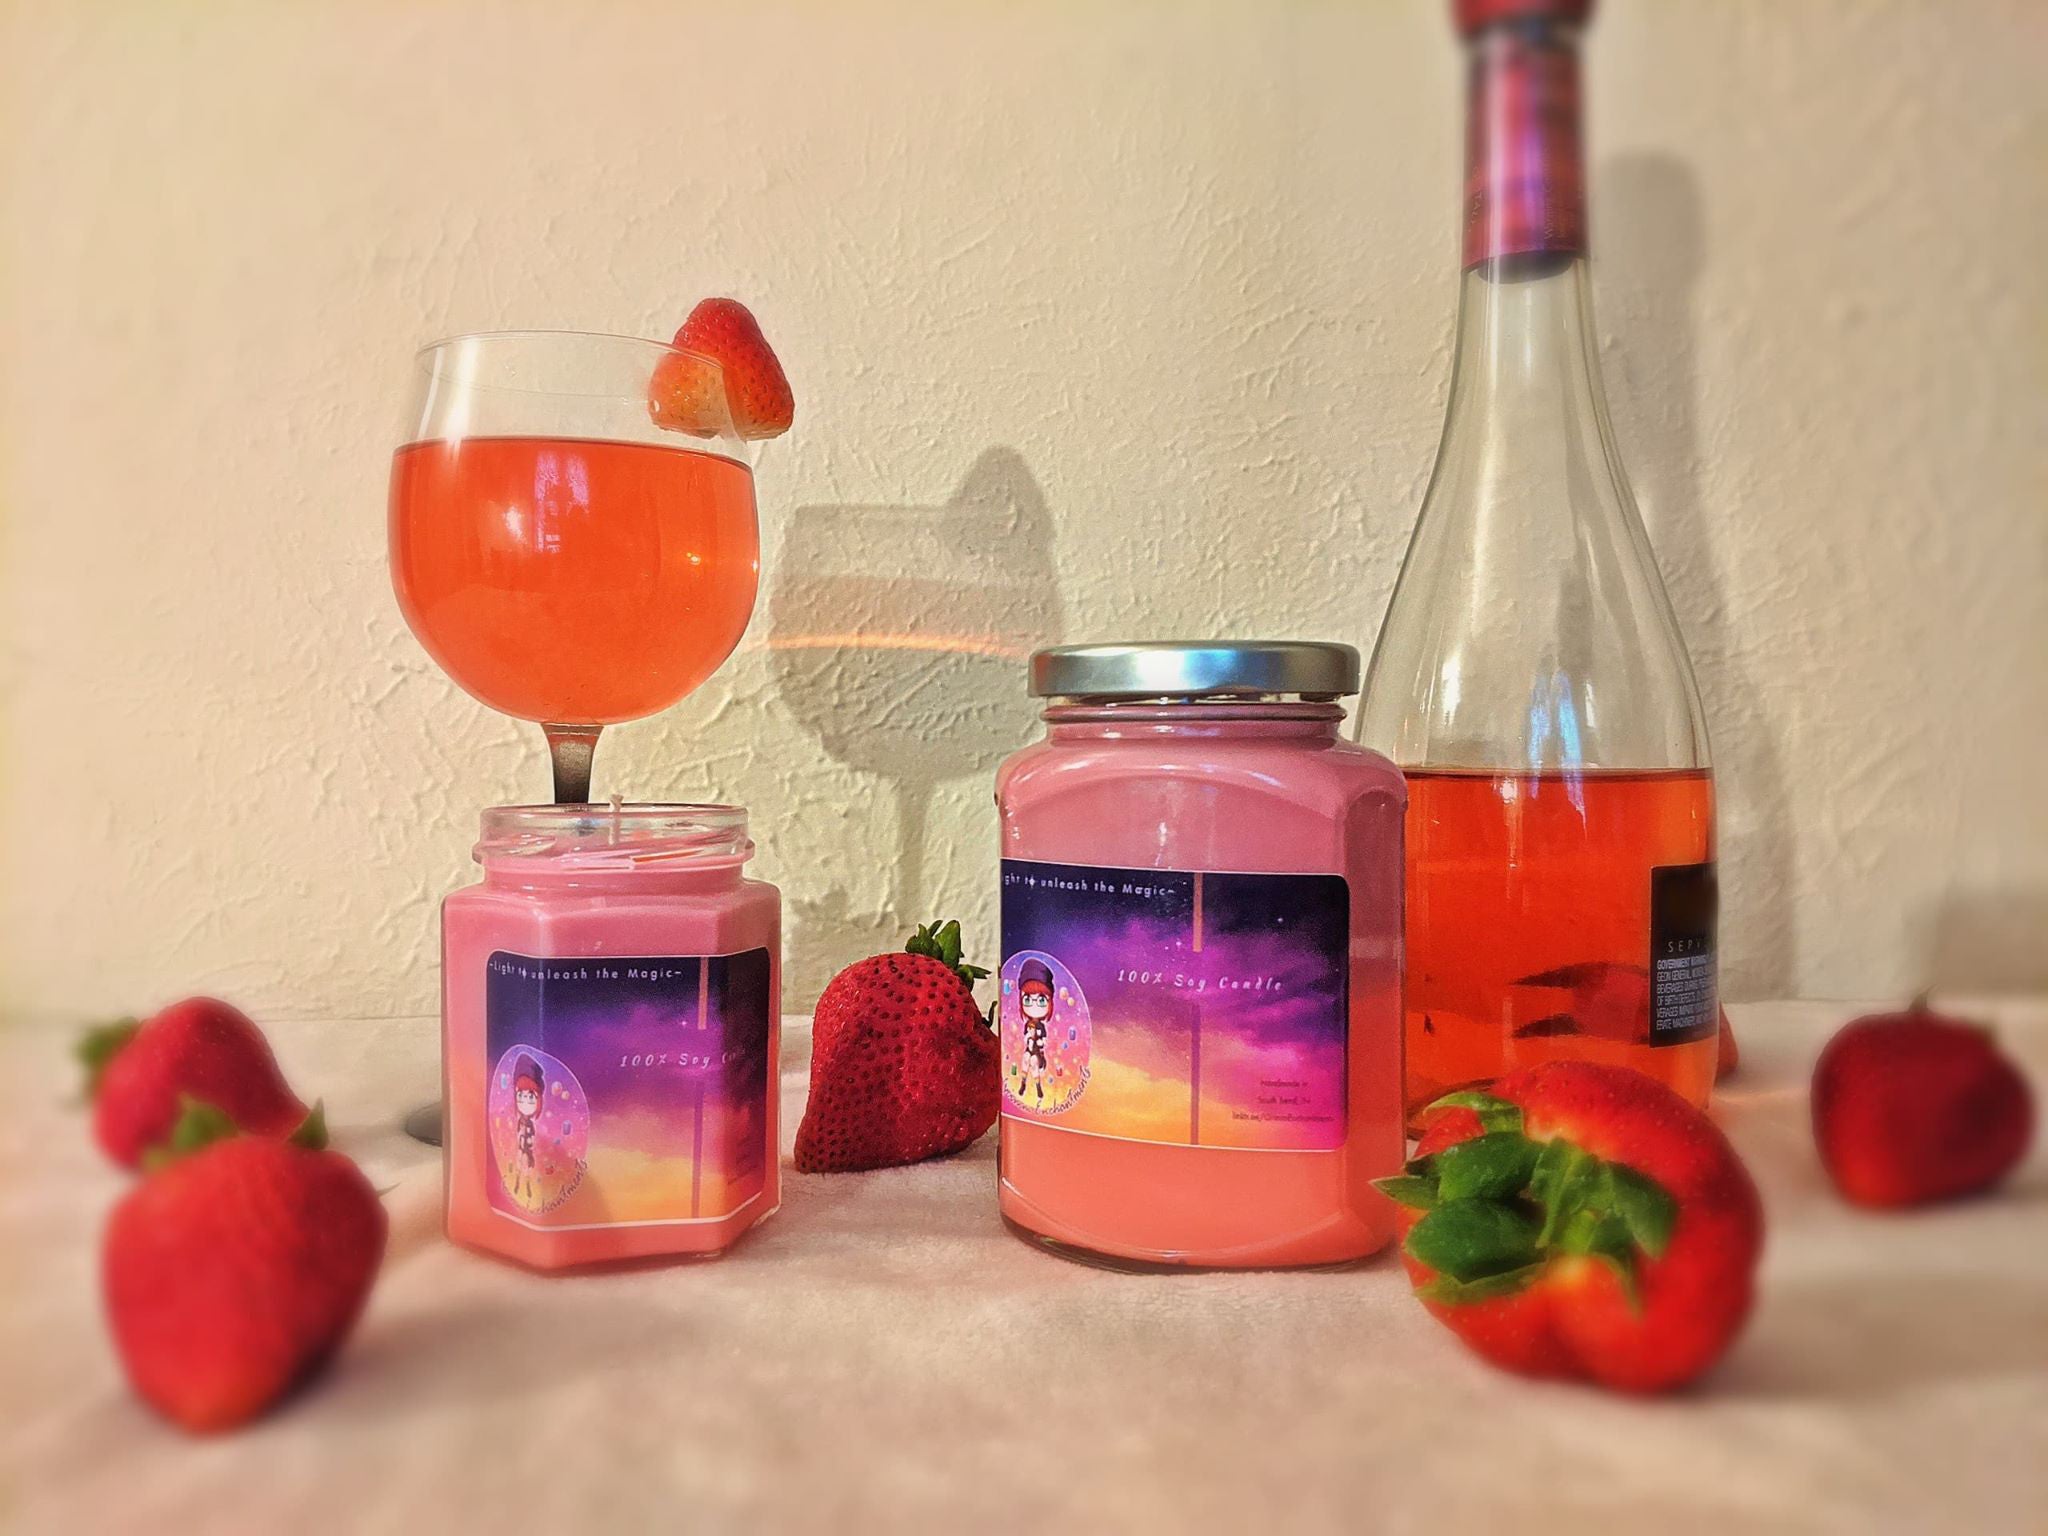 Strawberry Wine Candle